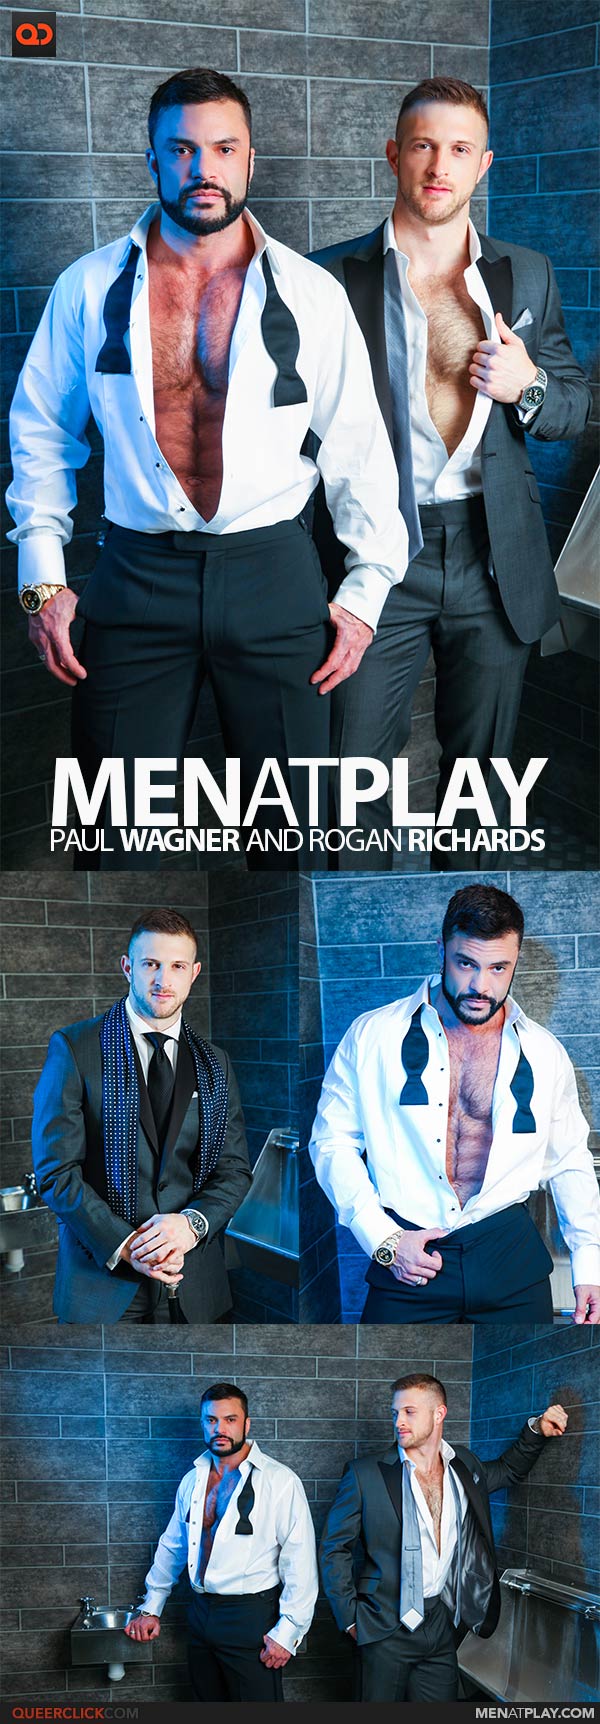 MenAtPlay: Paul Wagner and Rogan Richards